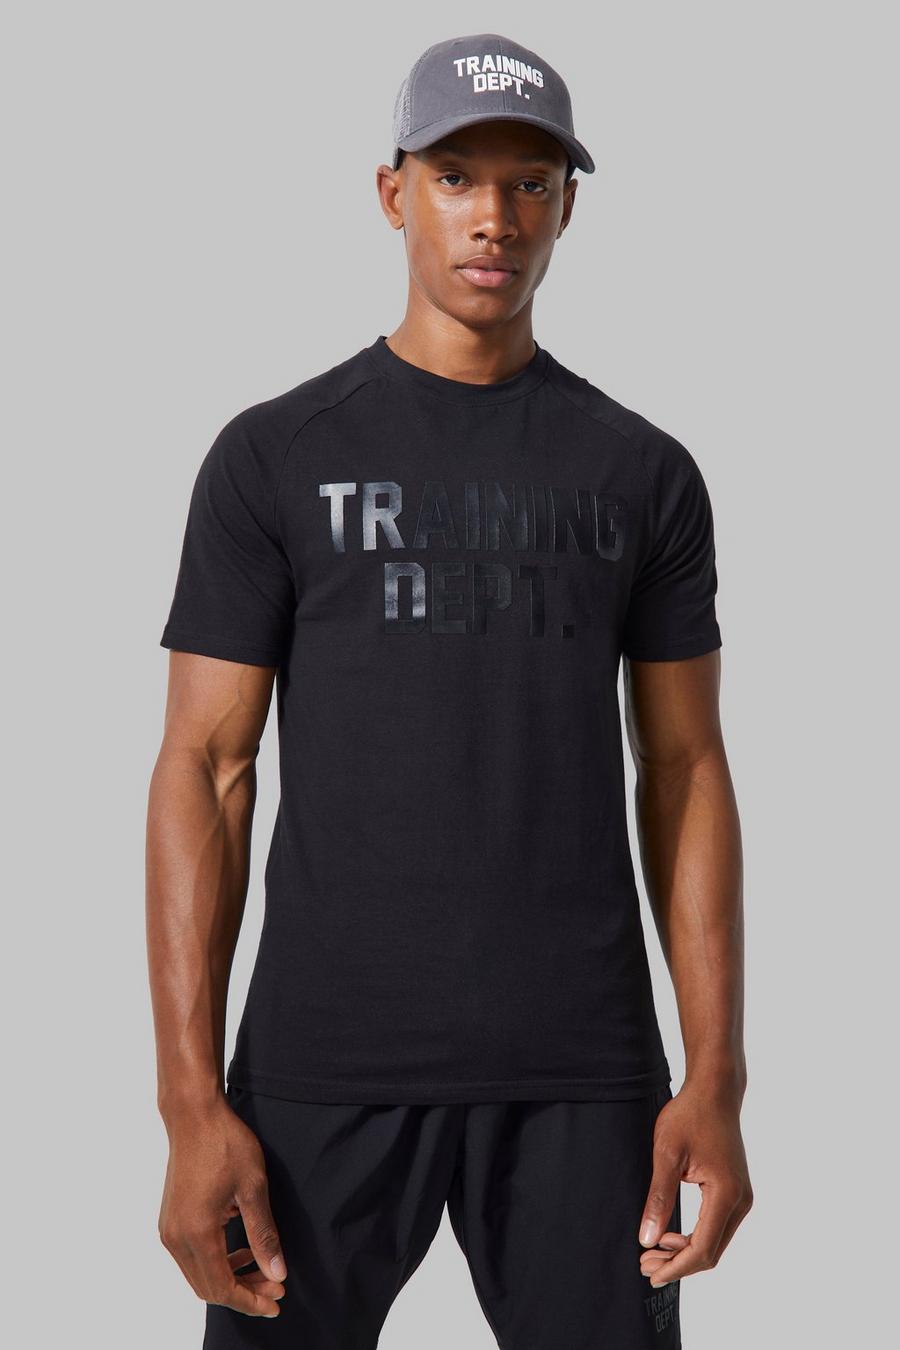 Black Man Active Muscle Fit Training Dept T-Shirt